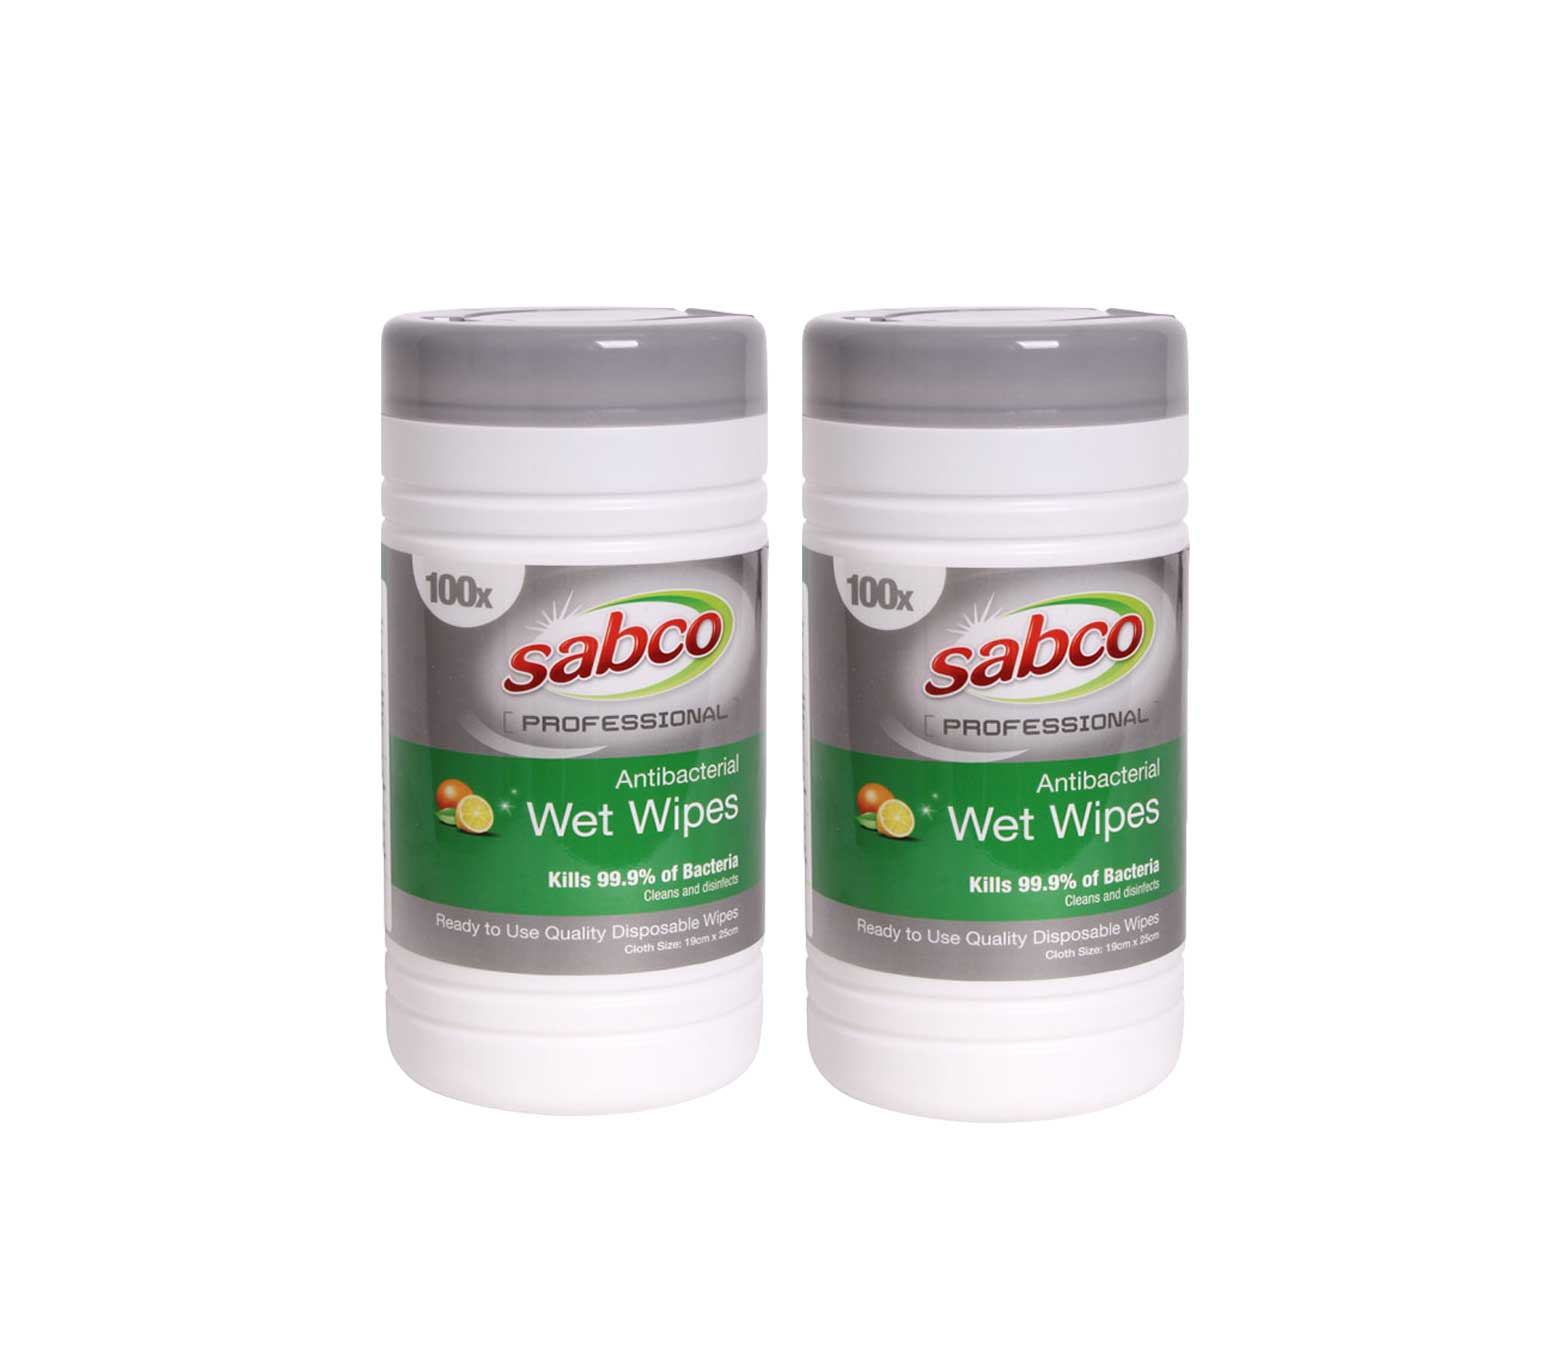 Sabco Antibacterial Wet Wipes 100pk.